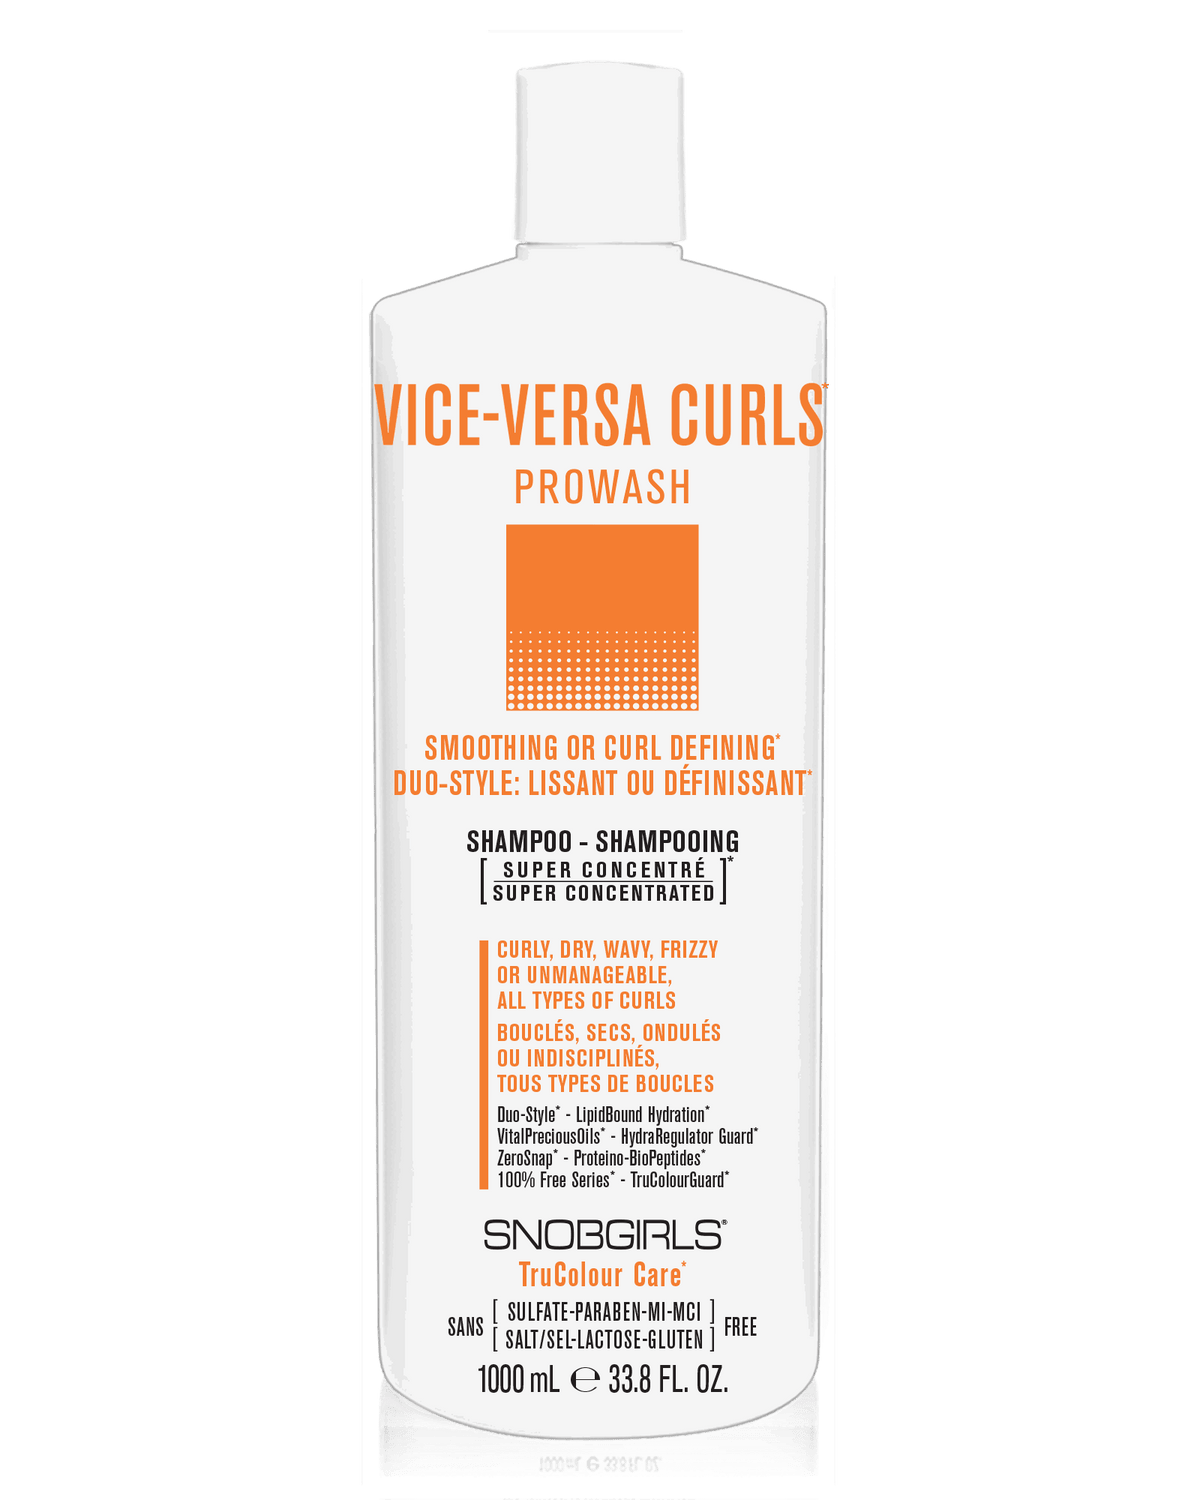 VICE-VERSA CURLS Prowash (shampoo) 33.8 FL. OZ. - SNOBGIRLS.com